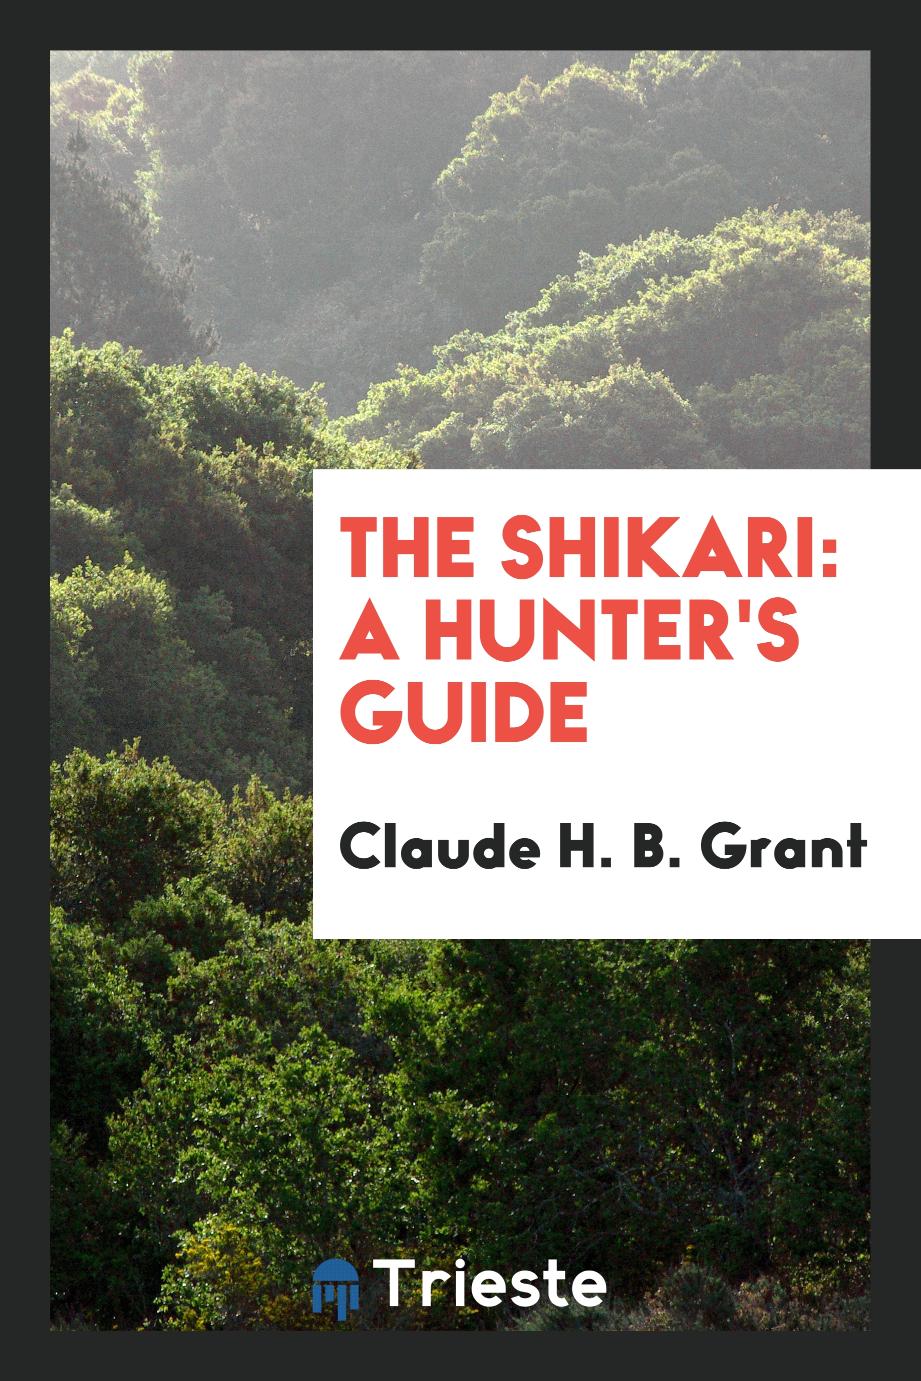 The Shikari: A Hunter's Guide